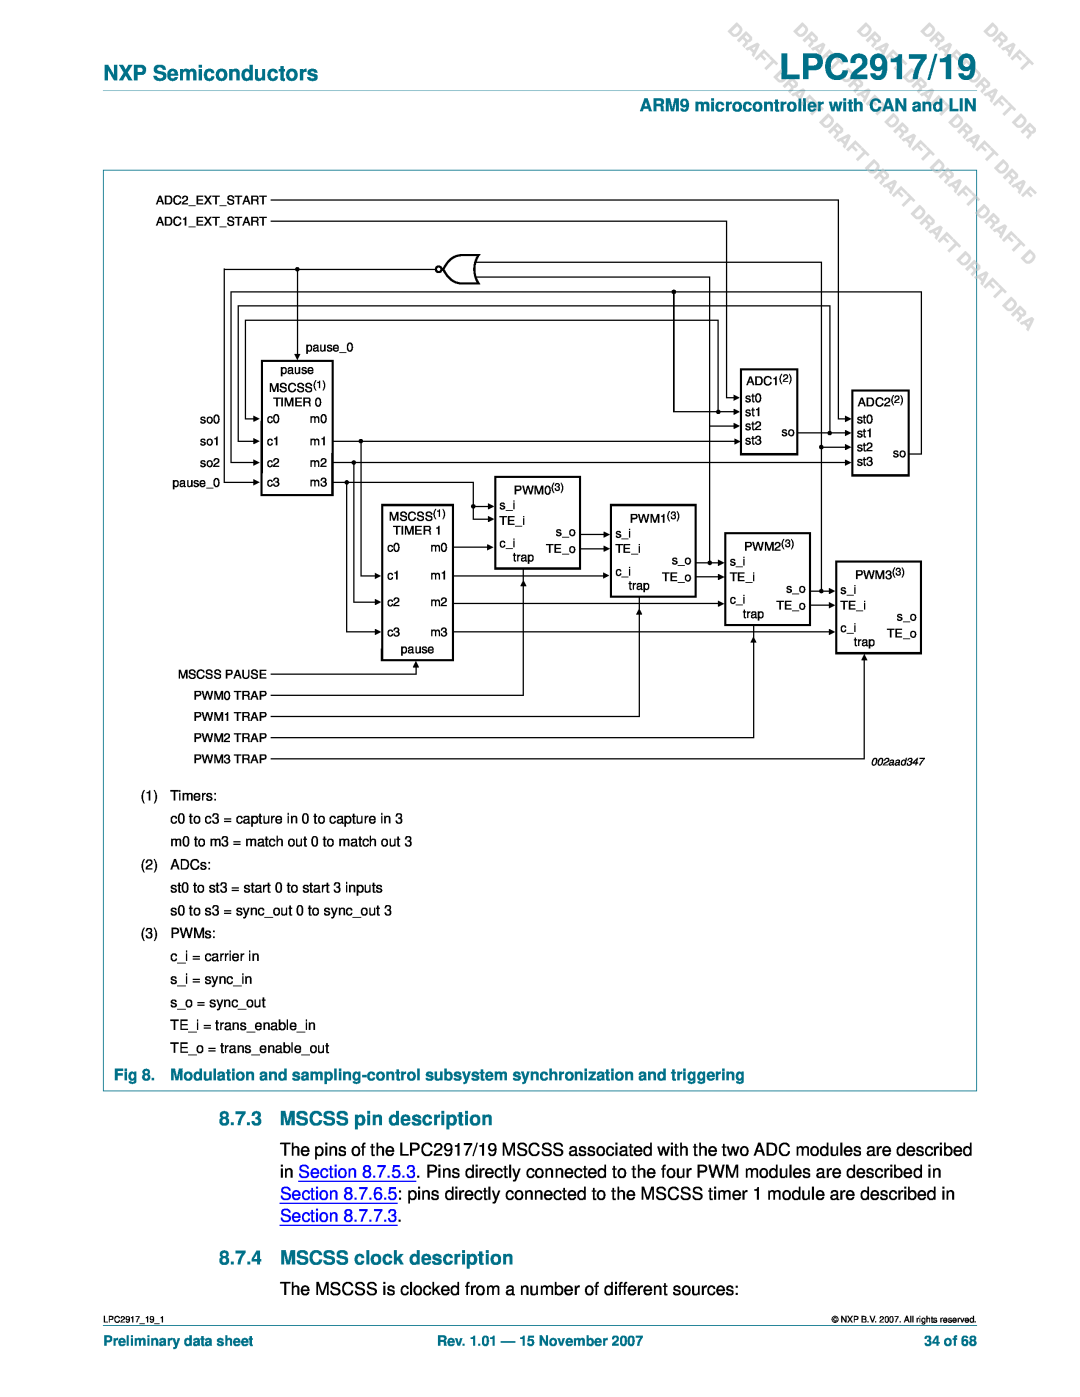 NXP Semiconductors LPC2919 user manual MSCSS pin description, MSCSS clock description, DLPC2917/19 